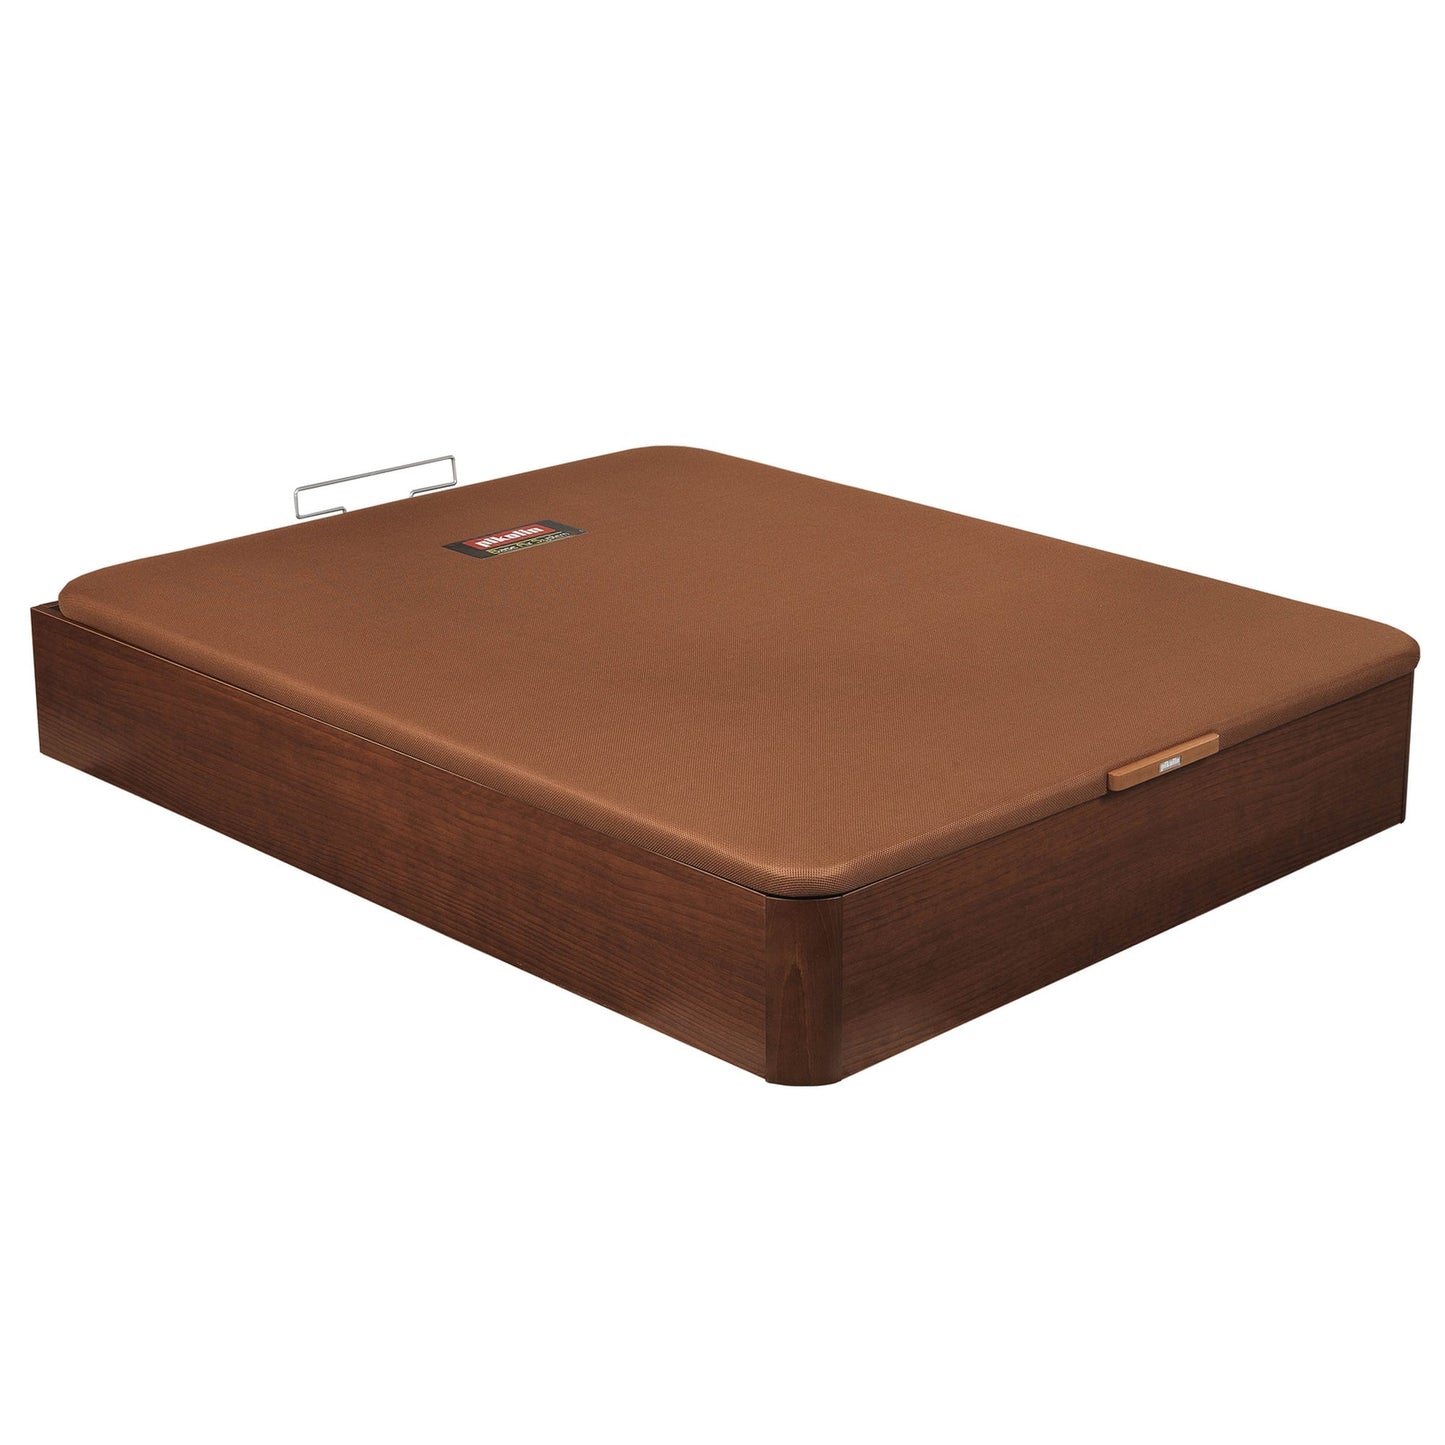 Canapé abatible de madera de color cerezo - NATURBOX CEREZO - 160x200